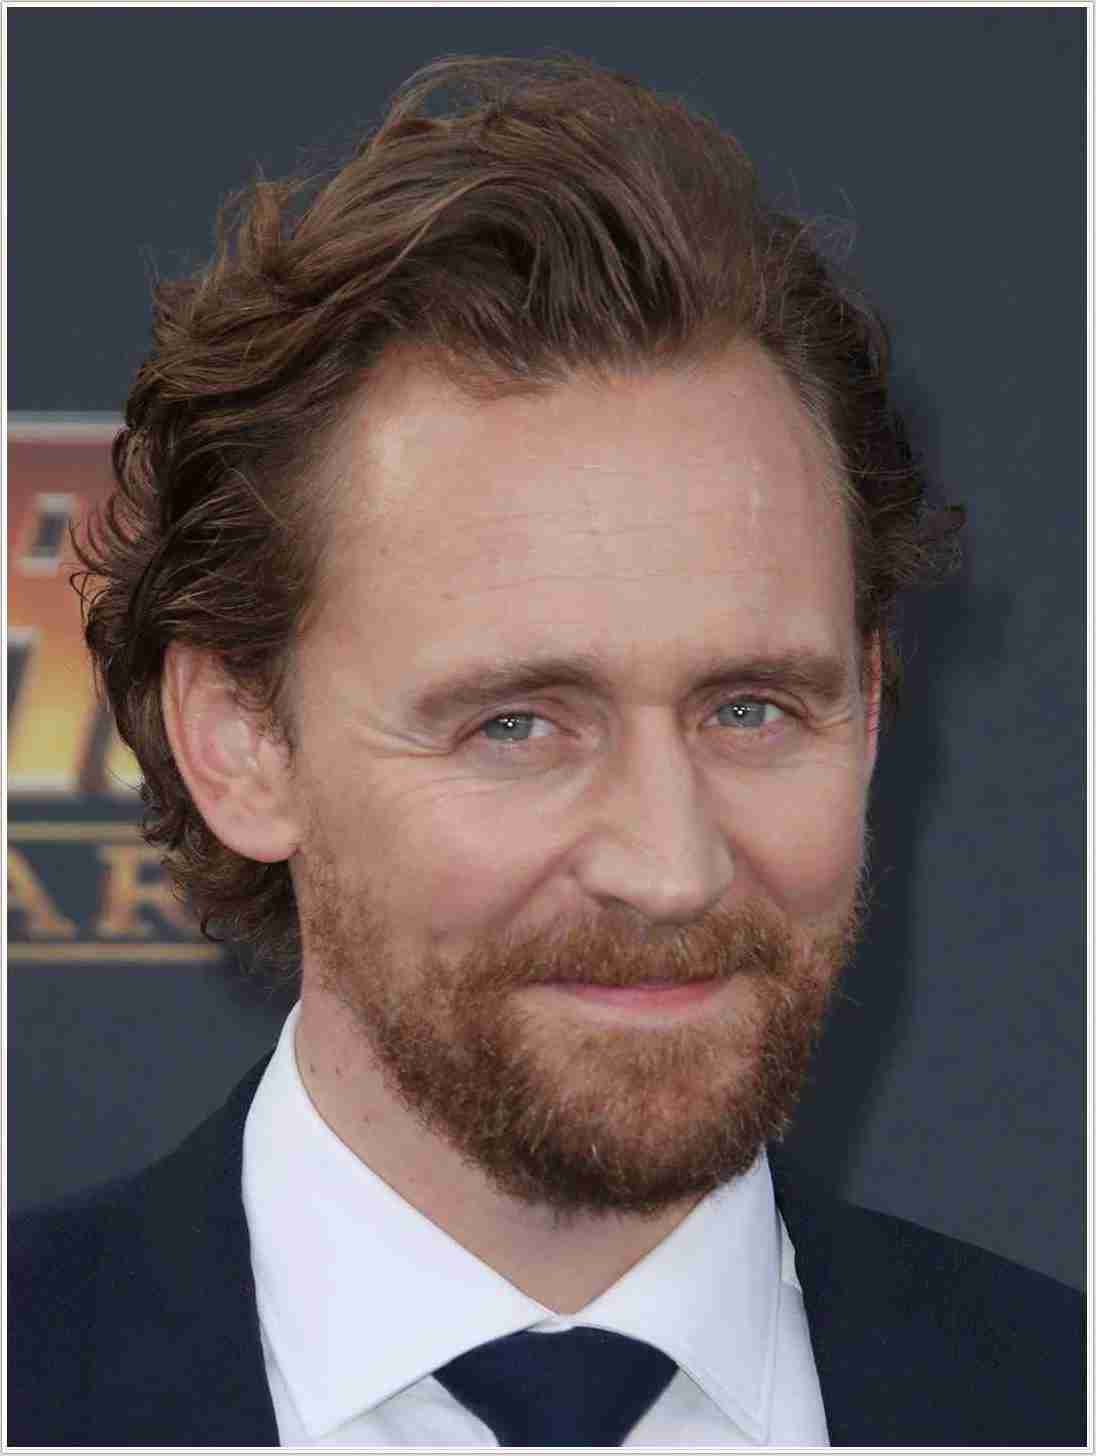 Tom hiddleston height